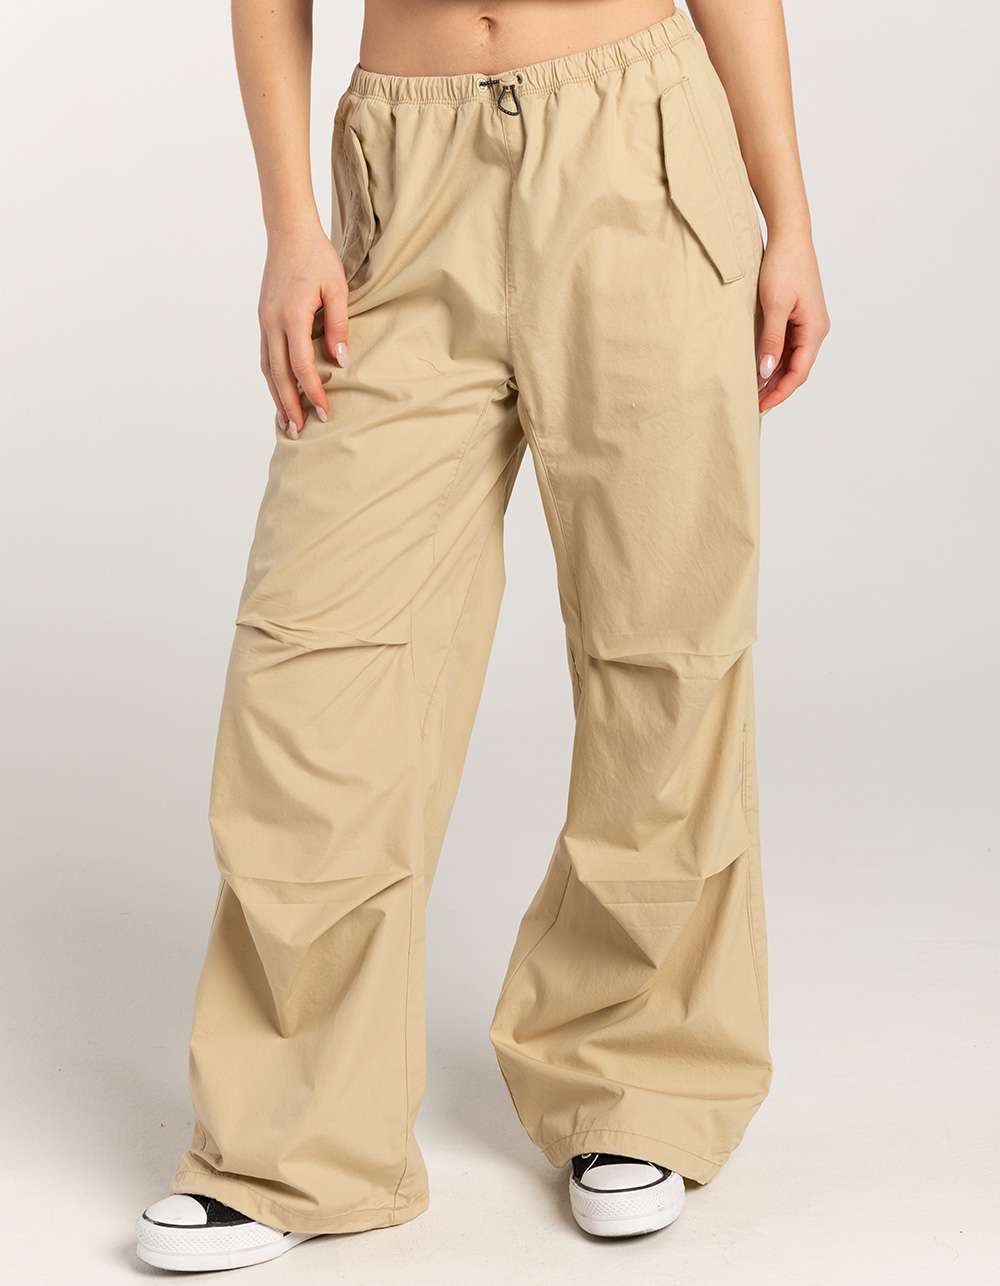  Parachute Pants for Girls Cargo Trousers Elastic Waist